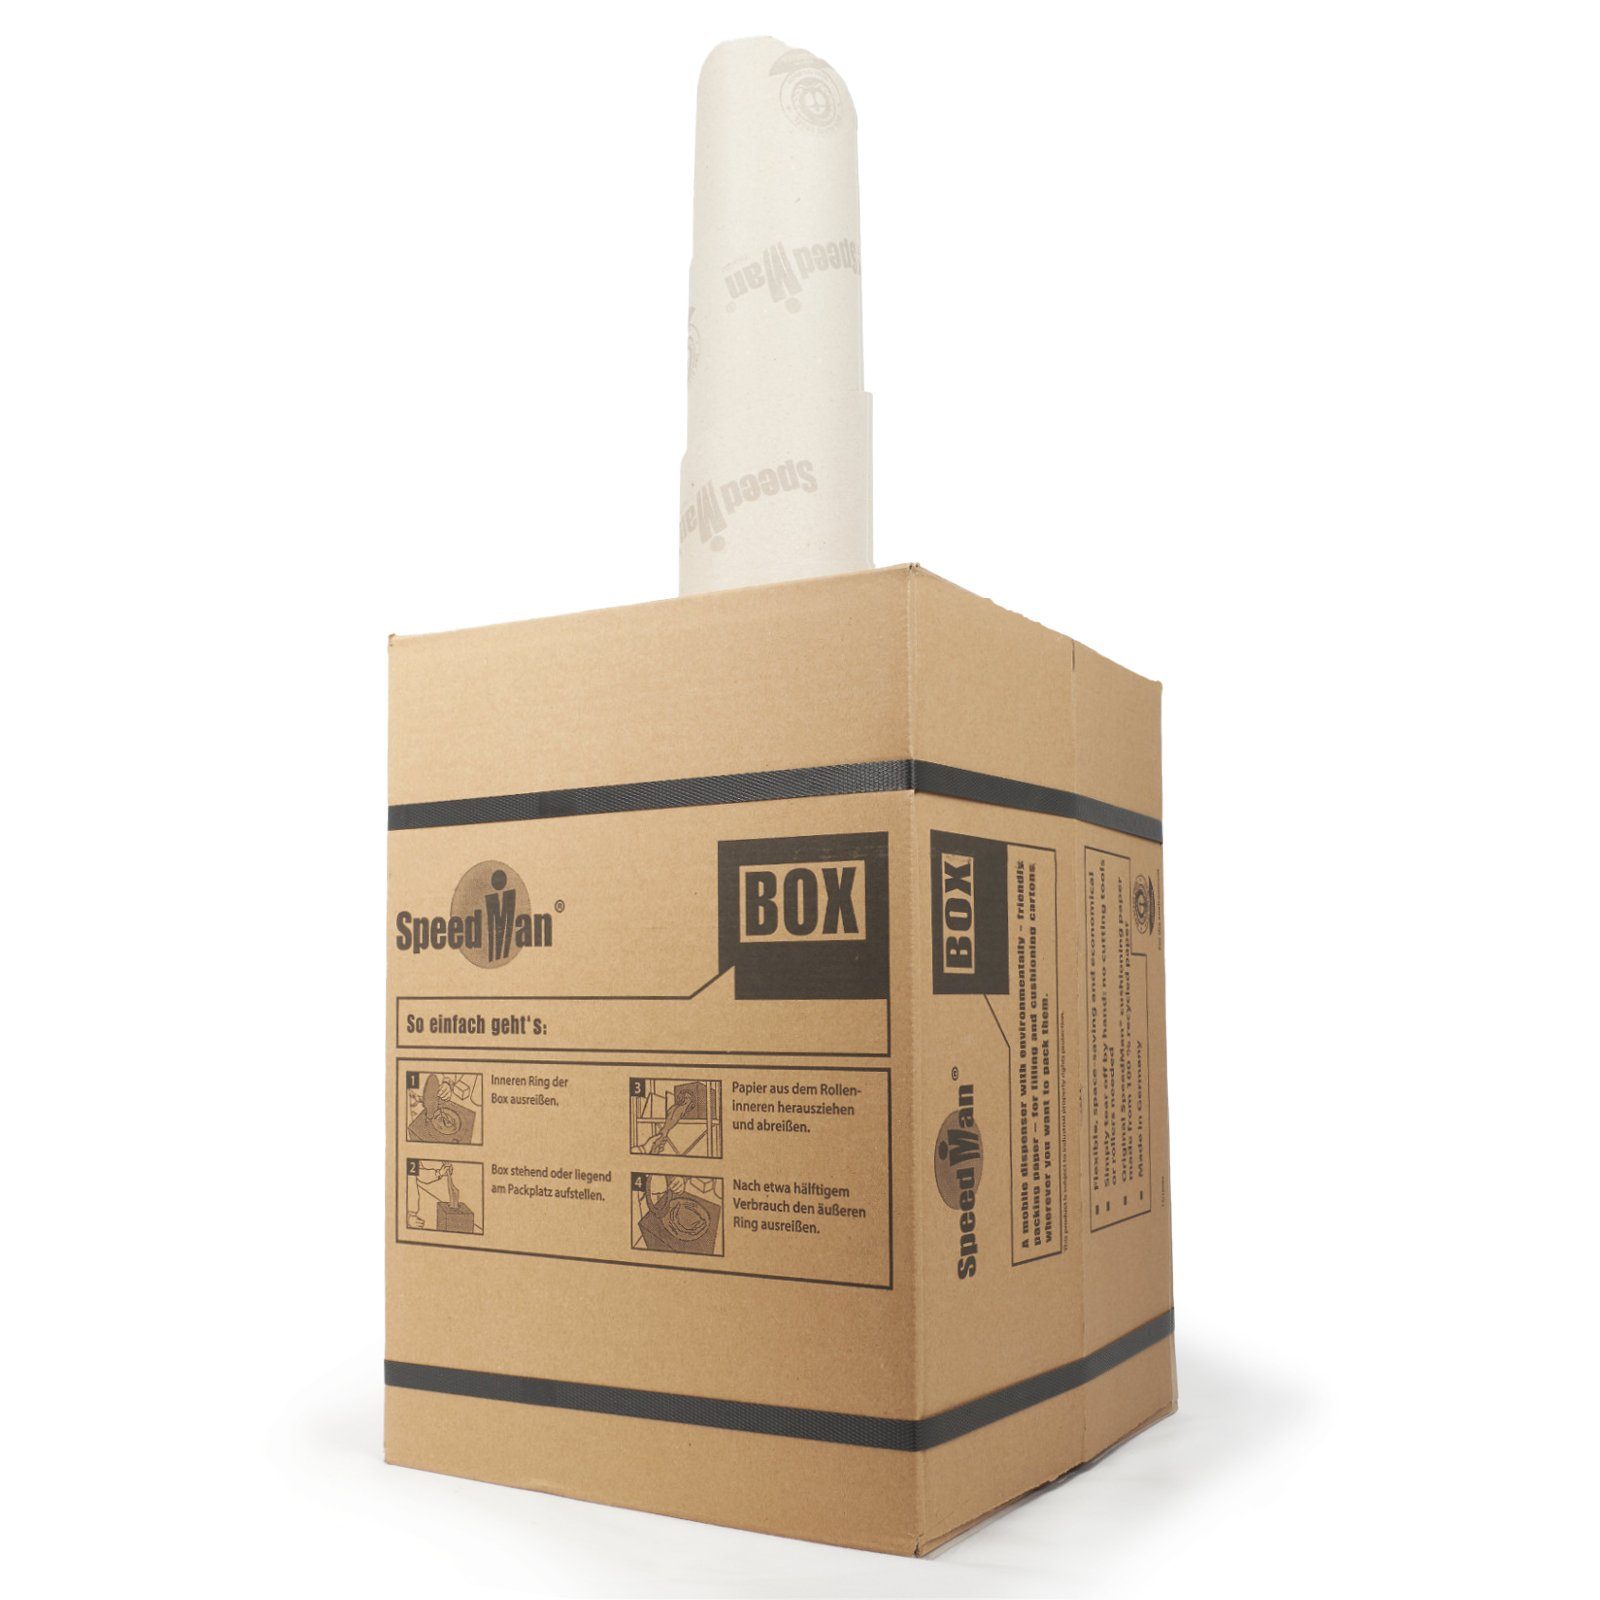 Schrenzpapier KK Spenderbox 450lfm Füllmaterial Packpapier Verpackungen SpeedMan Endlospapier, in